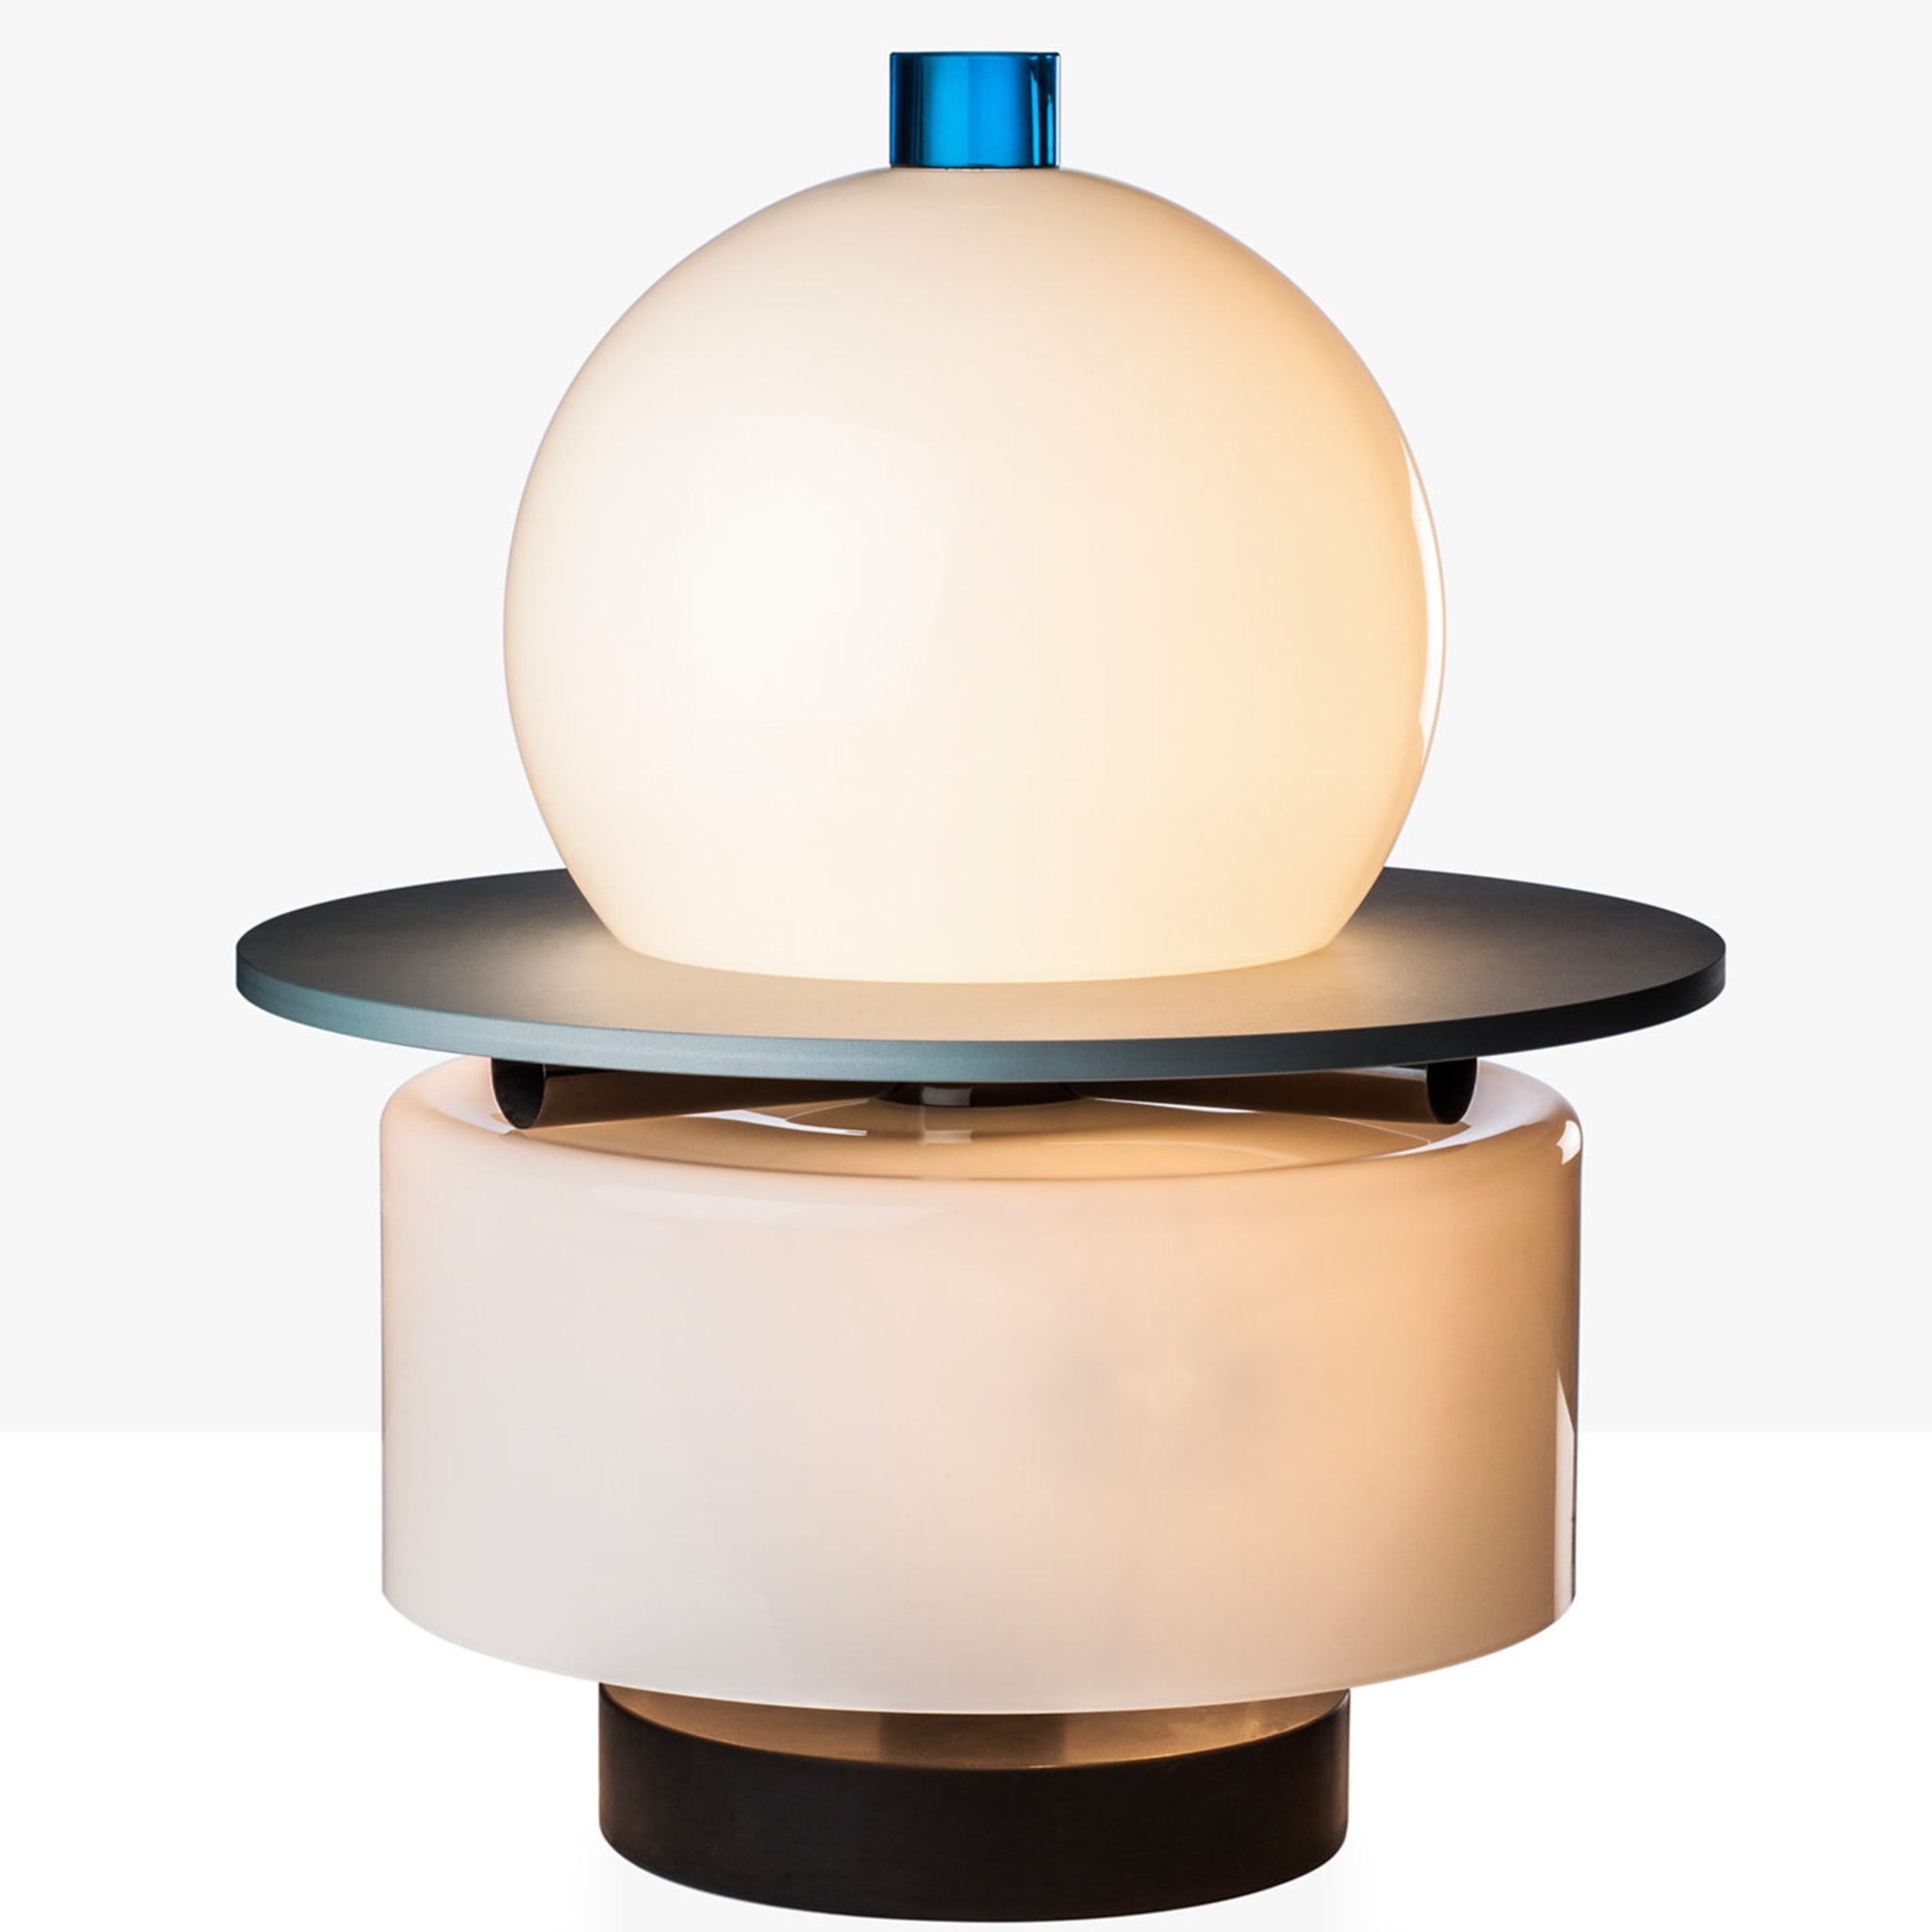 Kiritam Table Lamp by Ettore Sottsass - Alternative view 1